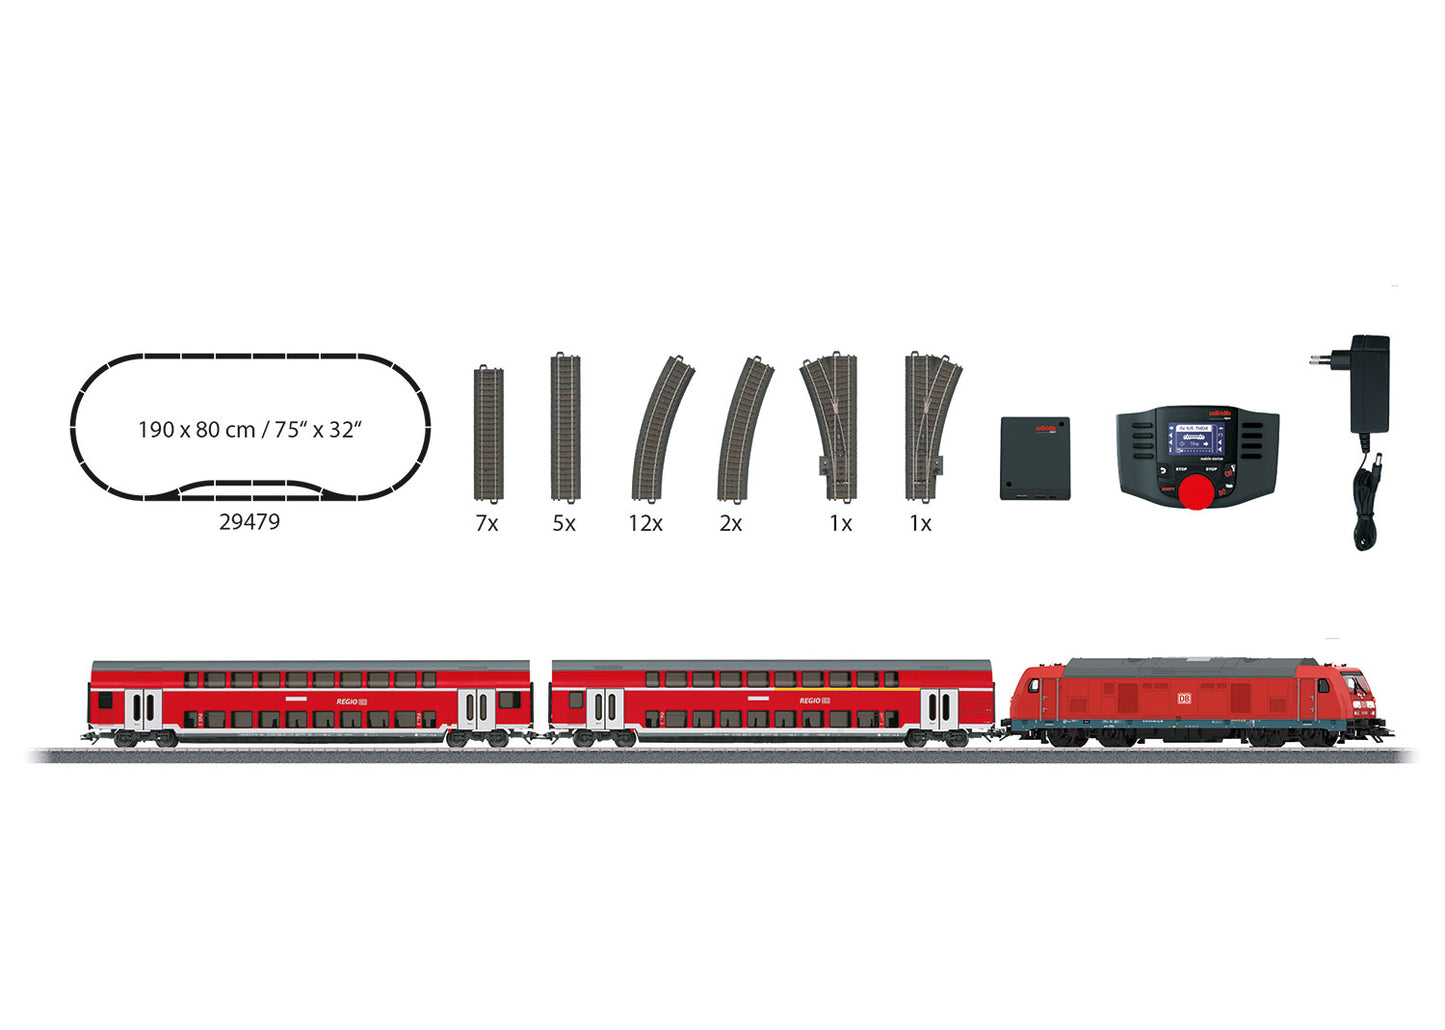 Marklin H0 29479 "Regional Express" Digital Starter Set